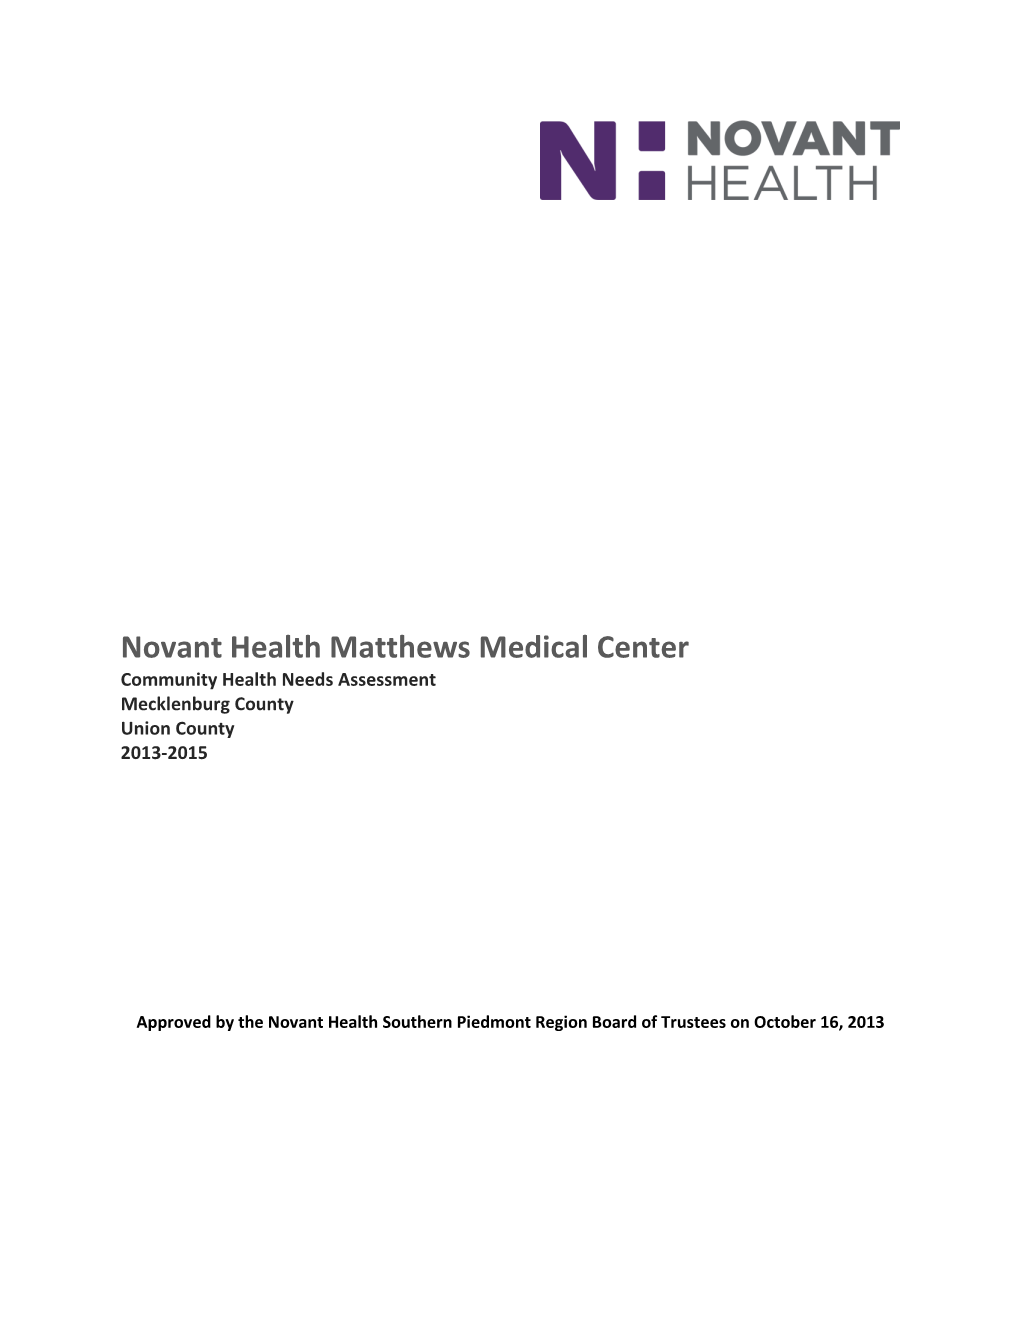 Novant Health Matthews Medical Center Community Health Needs Assessment Mecklenburg County Union County 2013-2015